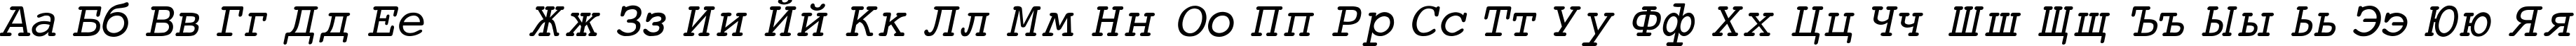 Пример написания русского алфавита шрифтом Courier-Normal-Italic